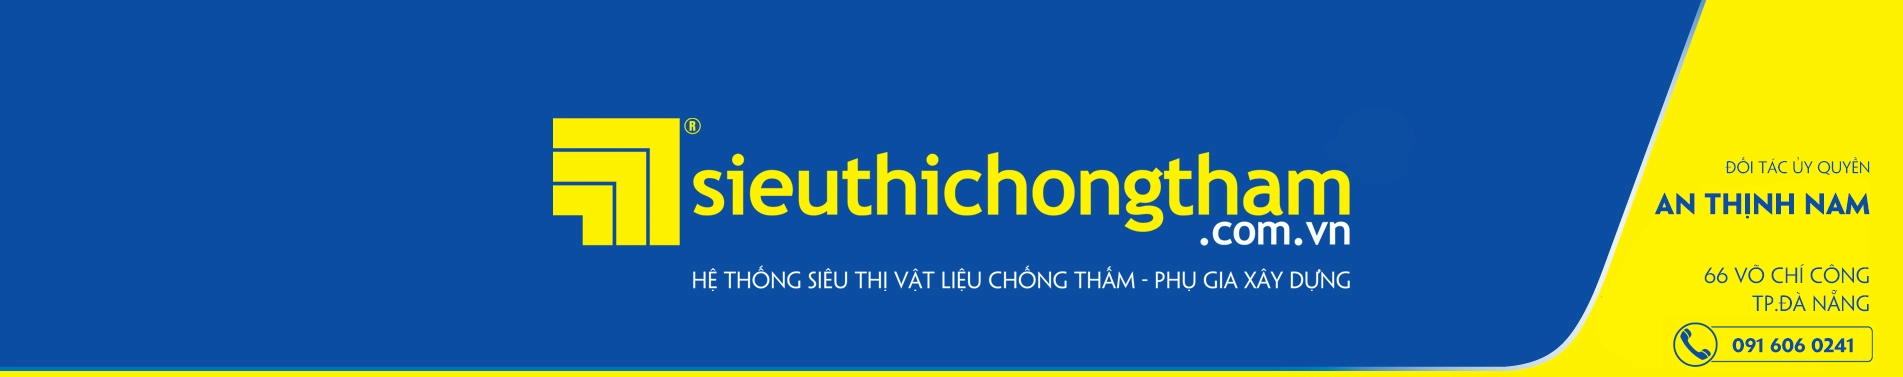 An Thinh Nam Banner